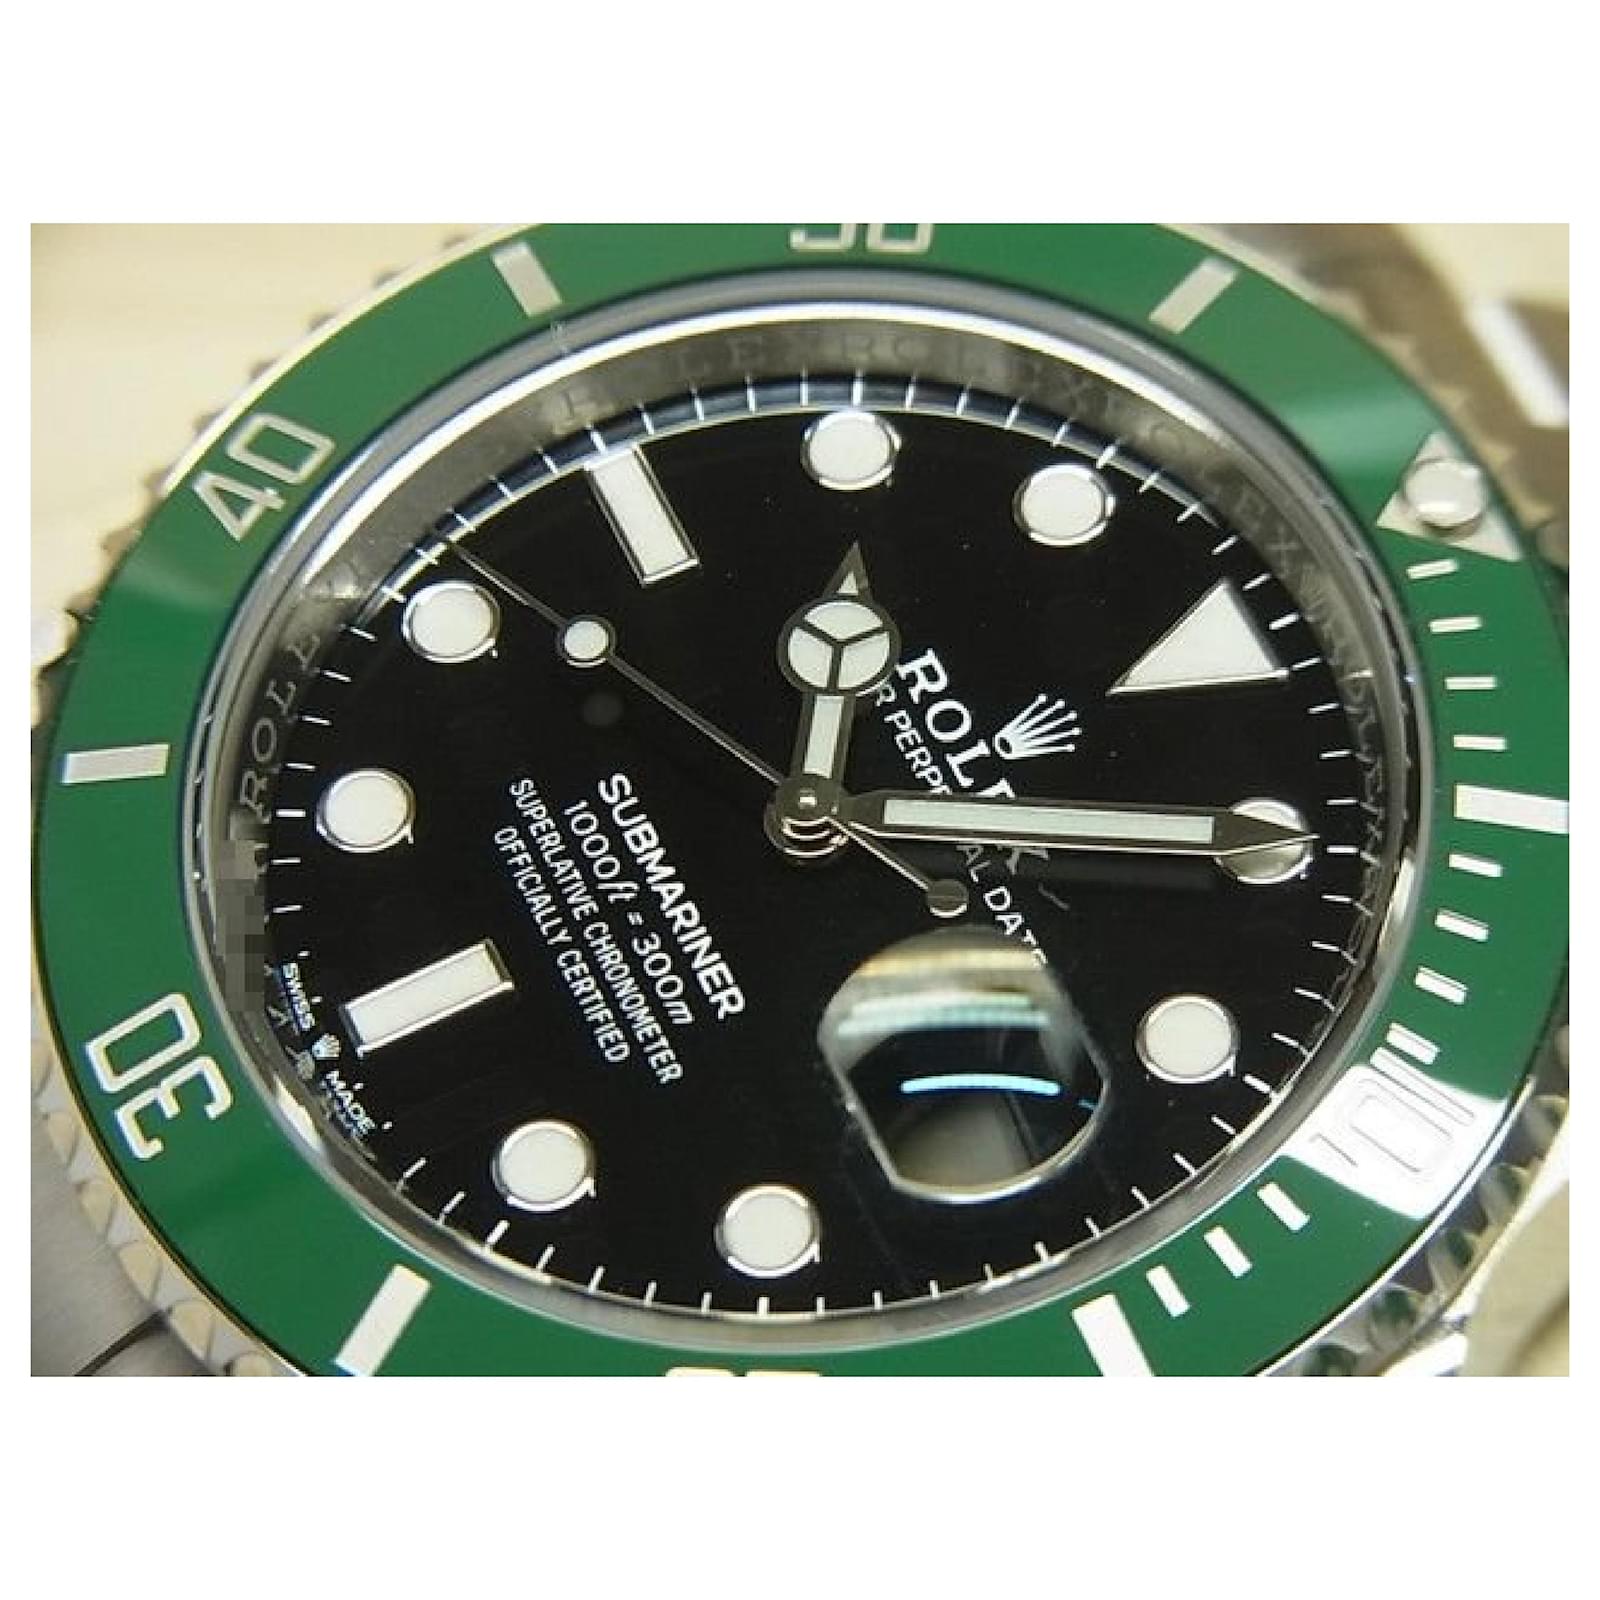 ROLEX Submariner date green bezel 126610LV '22 purchased Mens